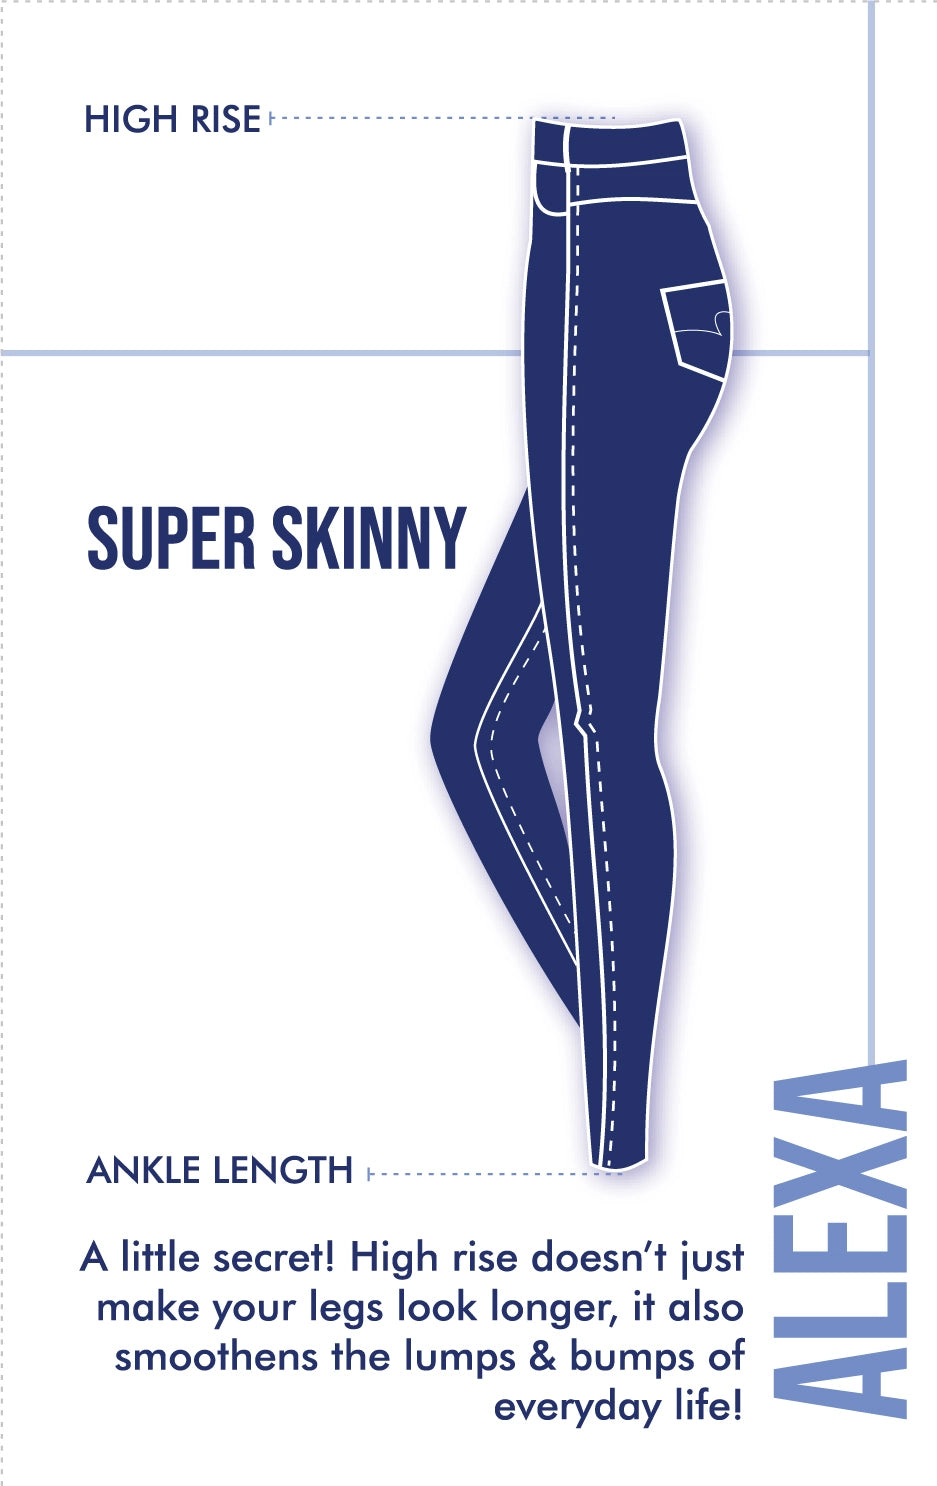 Spykar Women Black Lycra Super Skinny Fit Ankle Length Low Distressed Jeans -(Alexa)